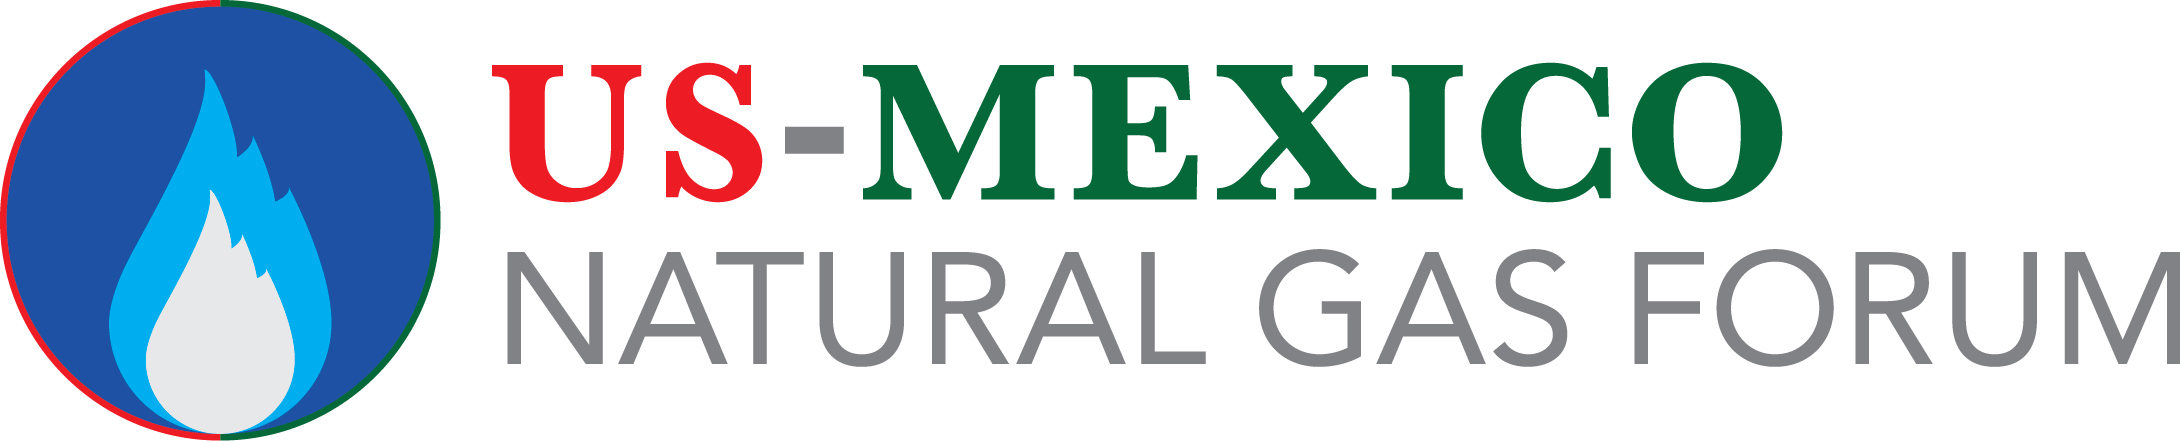 US-Mexico Natural Gas Forum